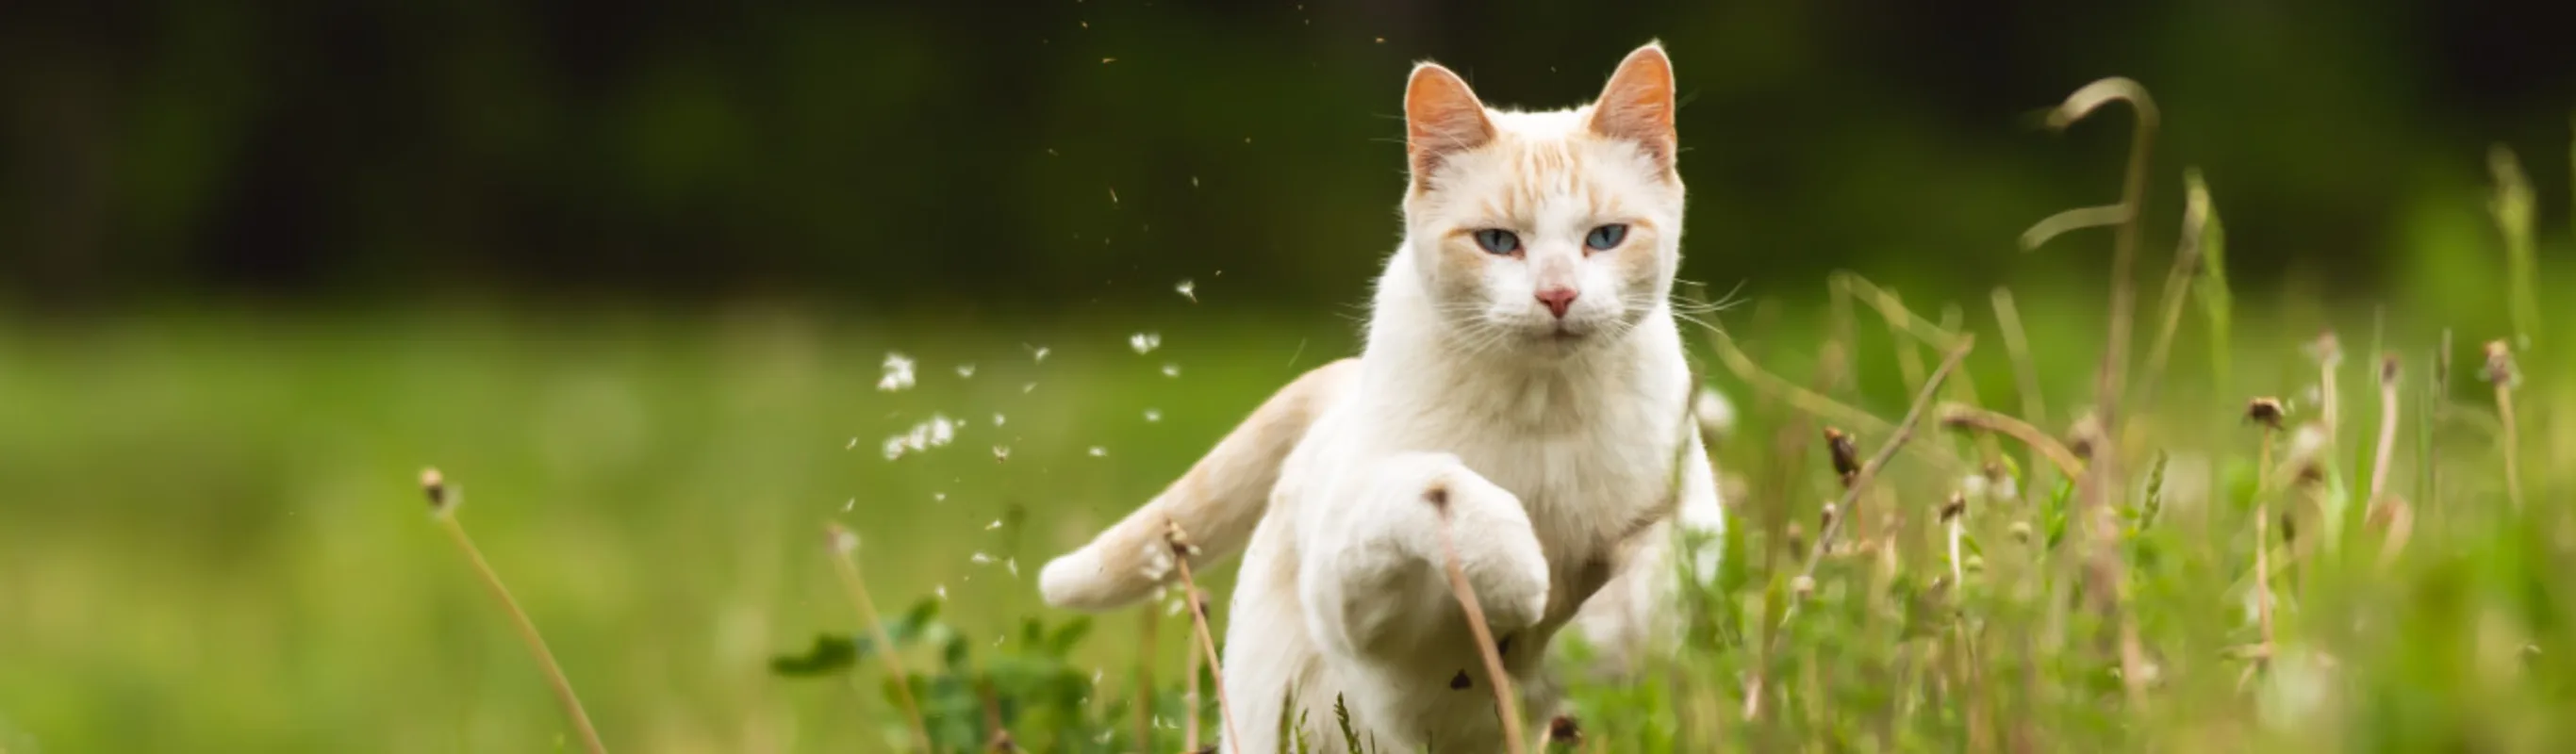 White and Orange cat running through the grassy green field.